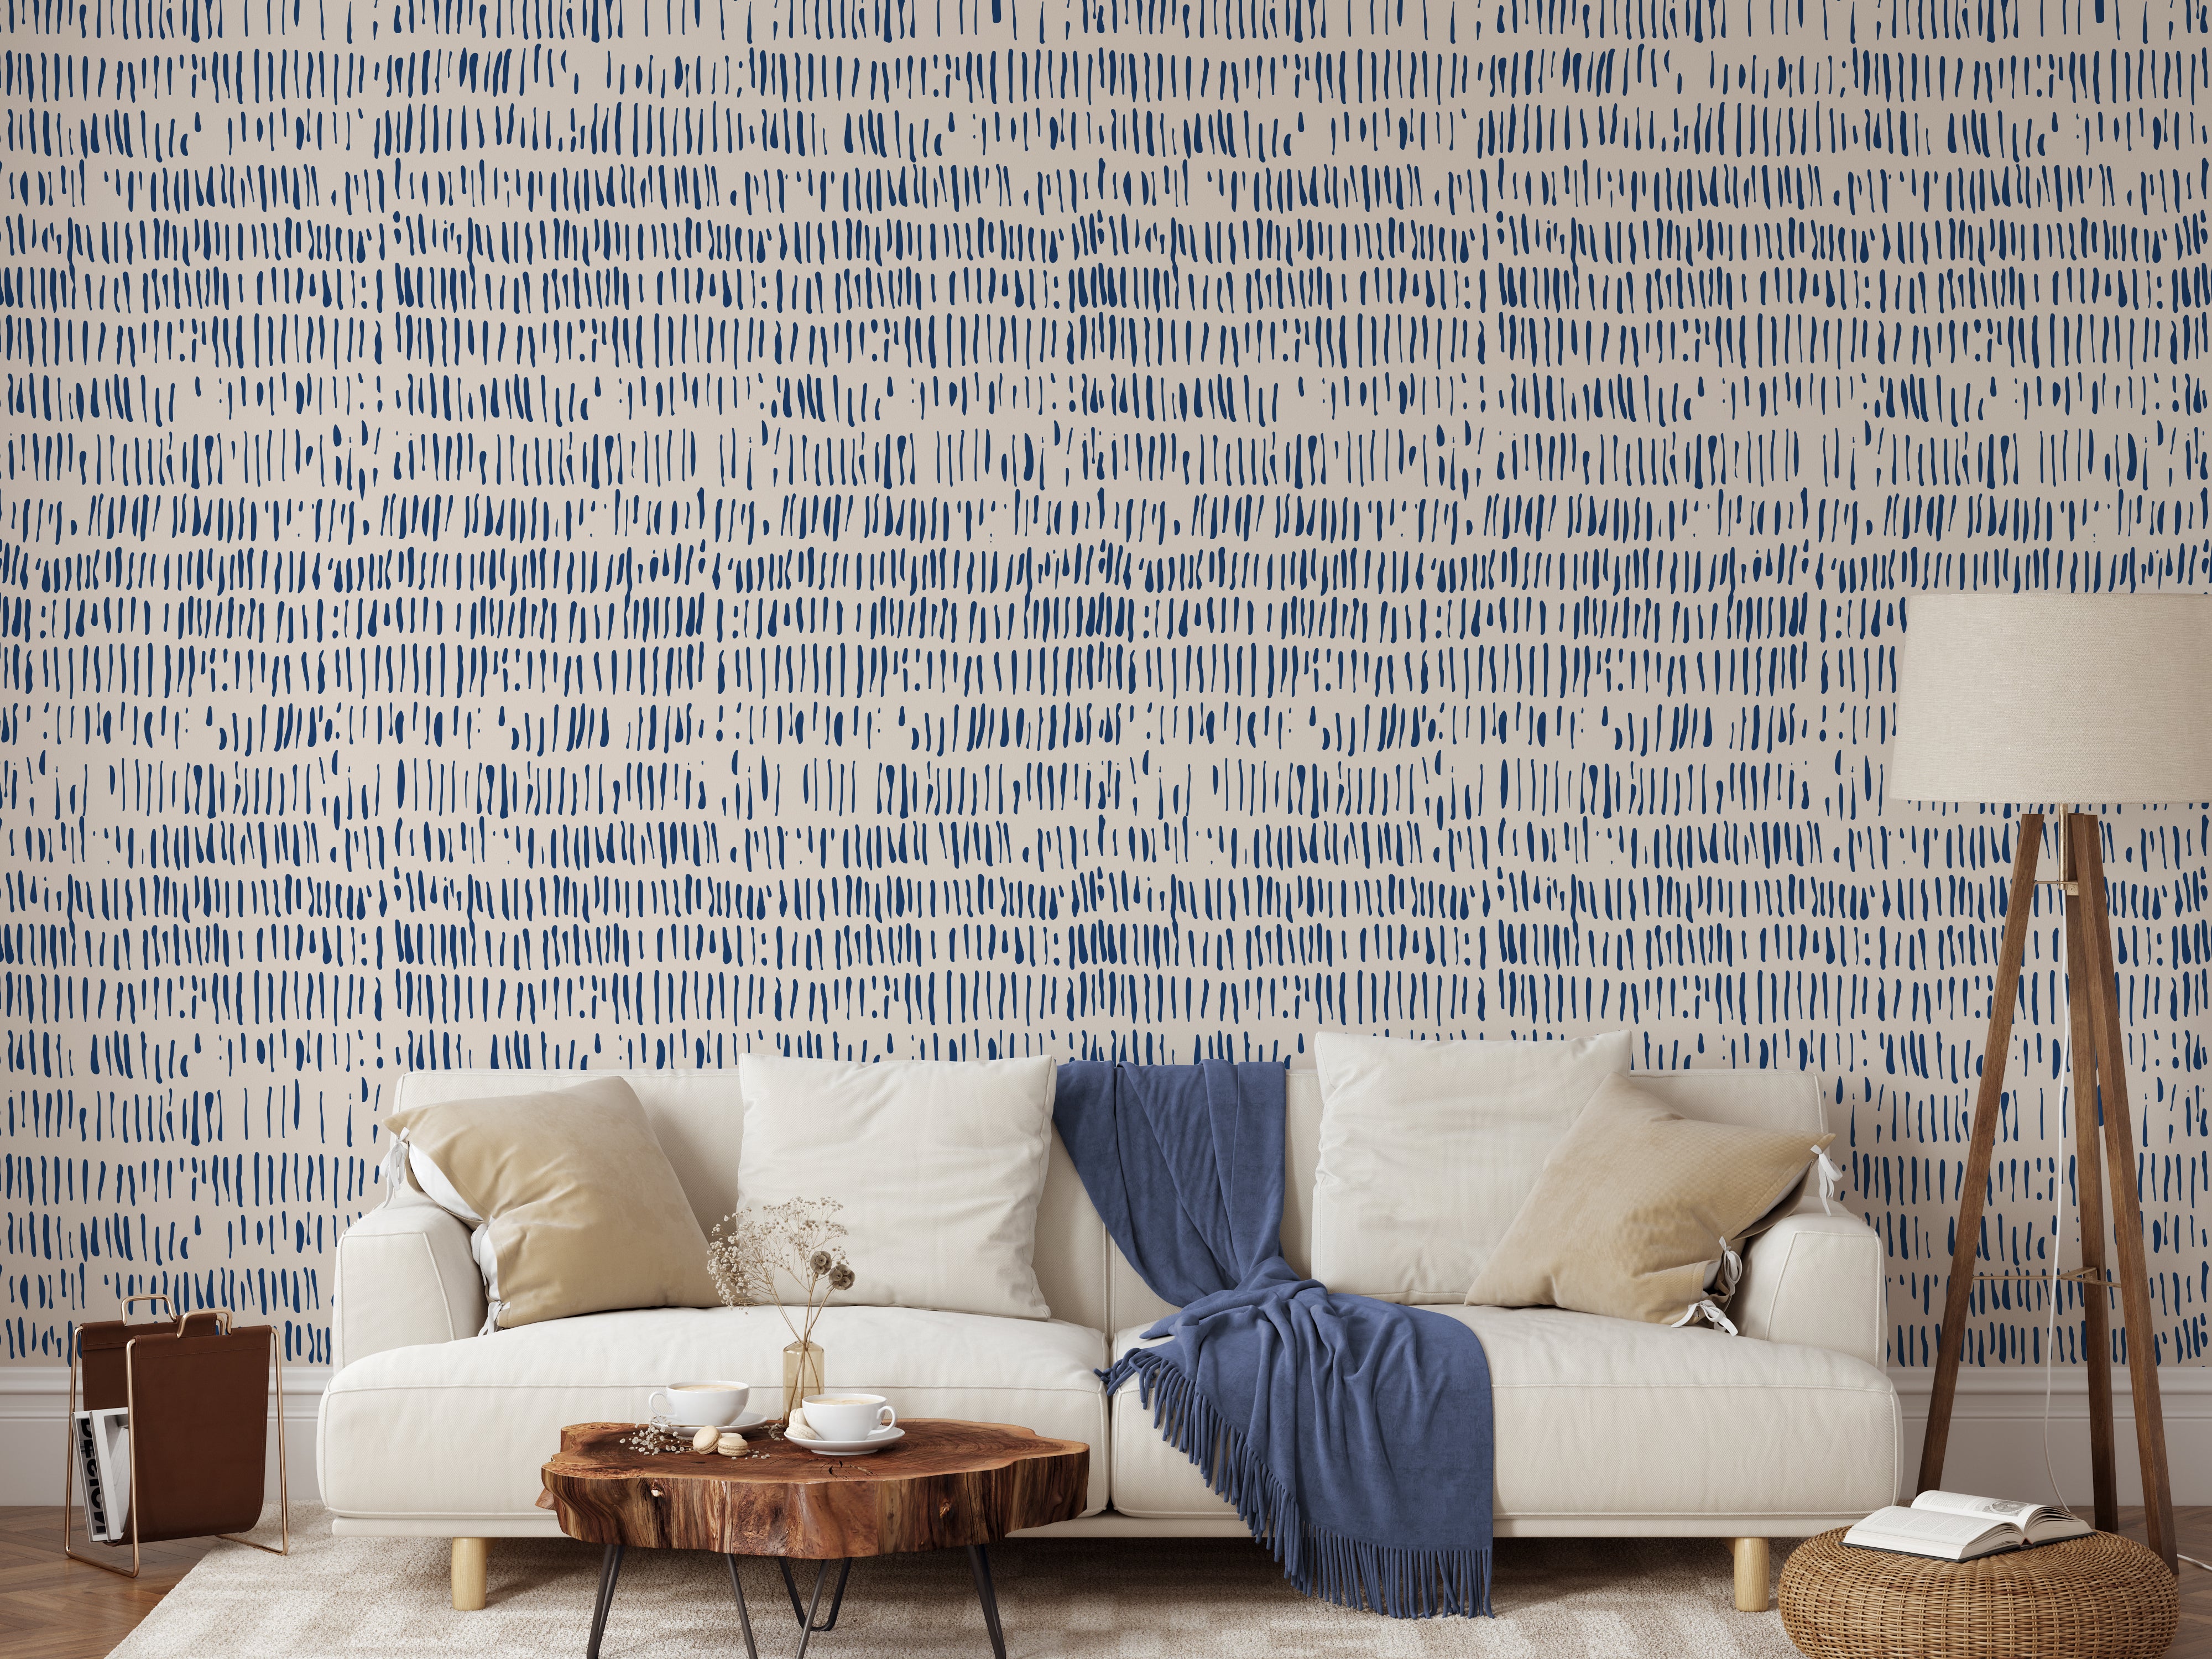 Tally Wallpaper Wallpaper - Wall Blush SG02 from WALL BLUSH